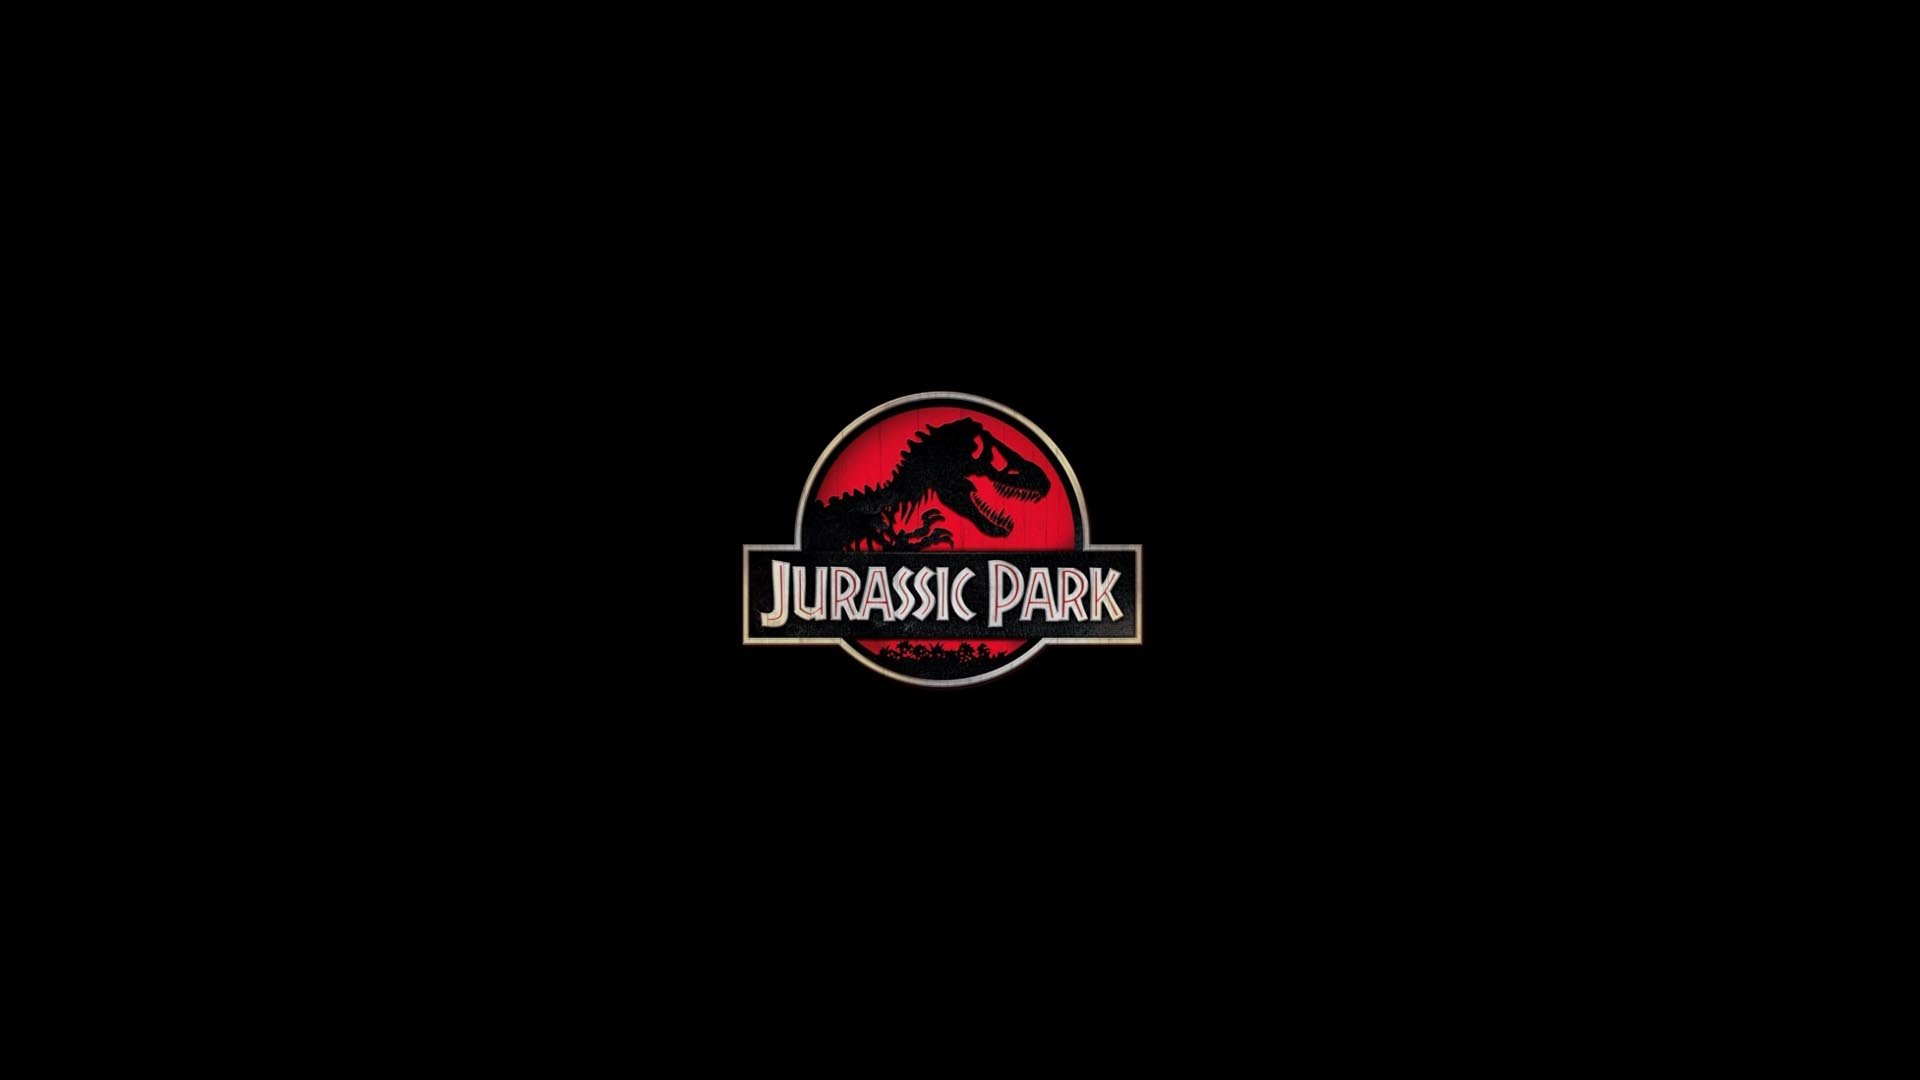 High resolution Jurassic Park full hd wallpaper ID:447672 for computer